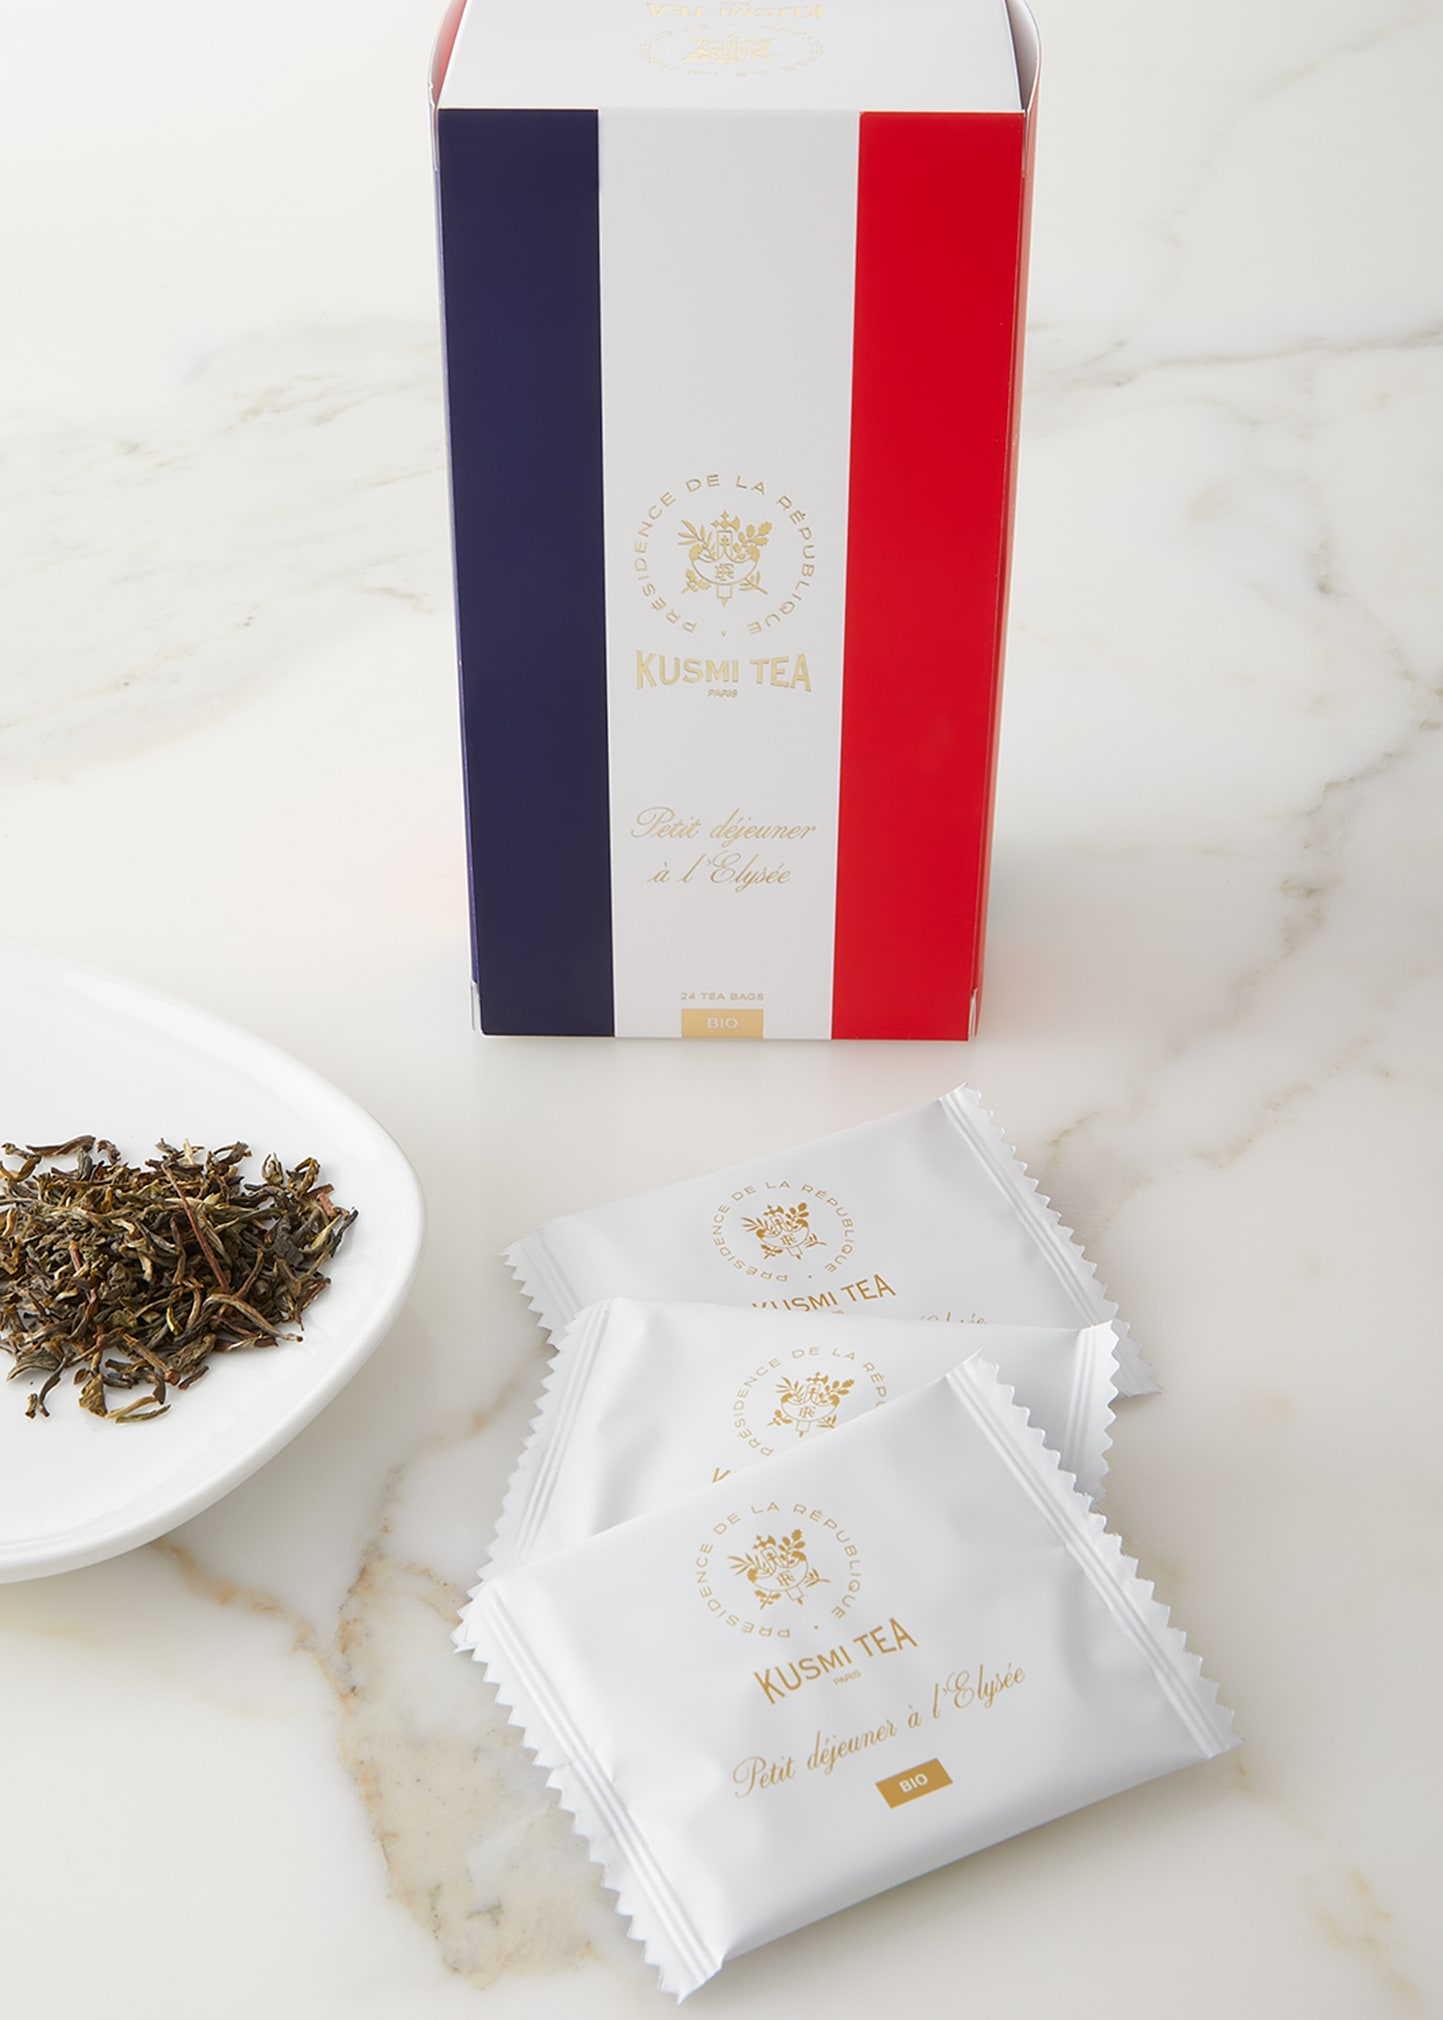 Organic Petit Dejeuner a l'Elysee Presidential Palace Breakfast Tea - 24 Enveloped Tea Bags (1.69oz)